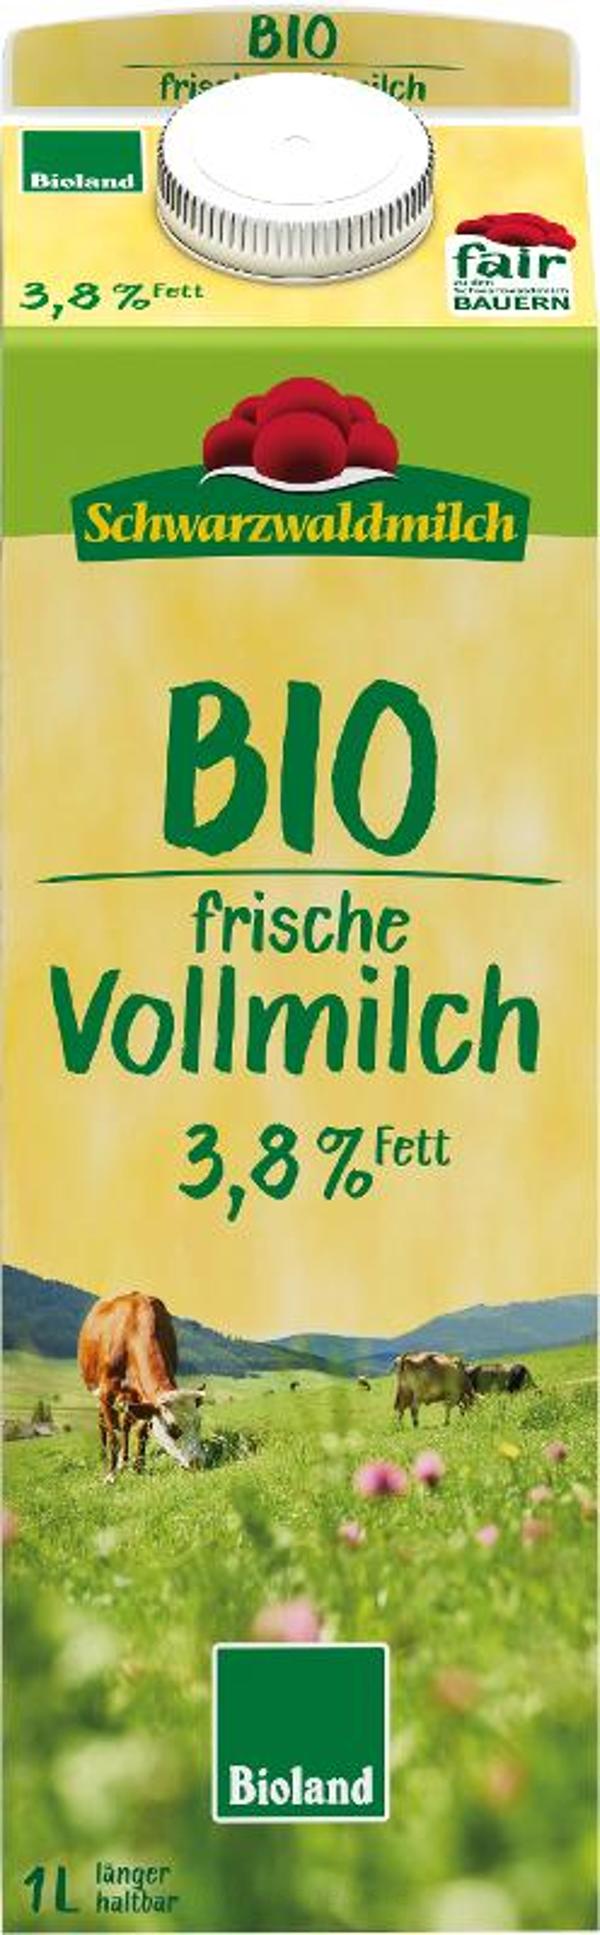 Produktfoto zu Schwarzwaldmilch 3,8% Tetra